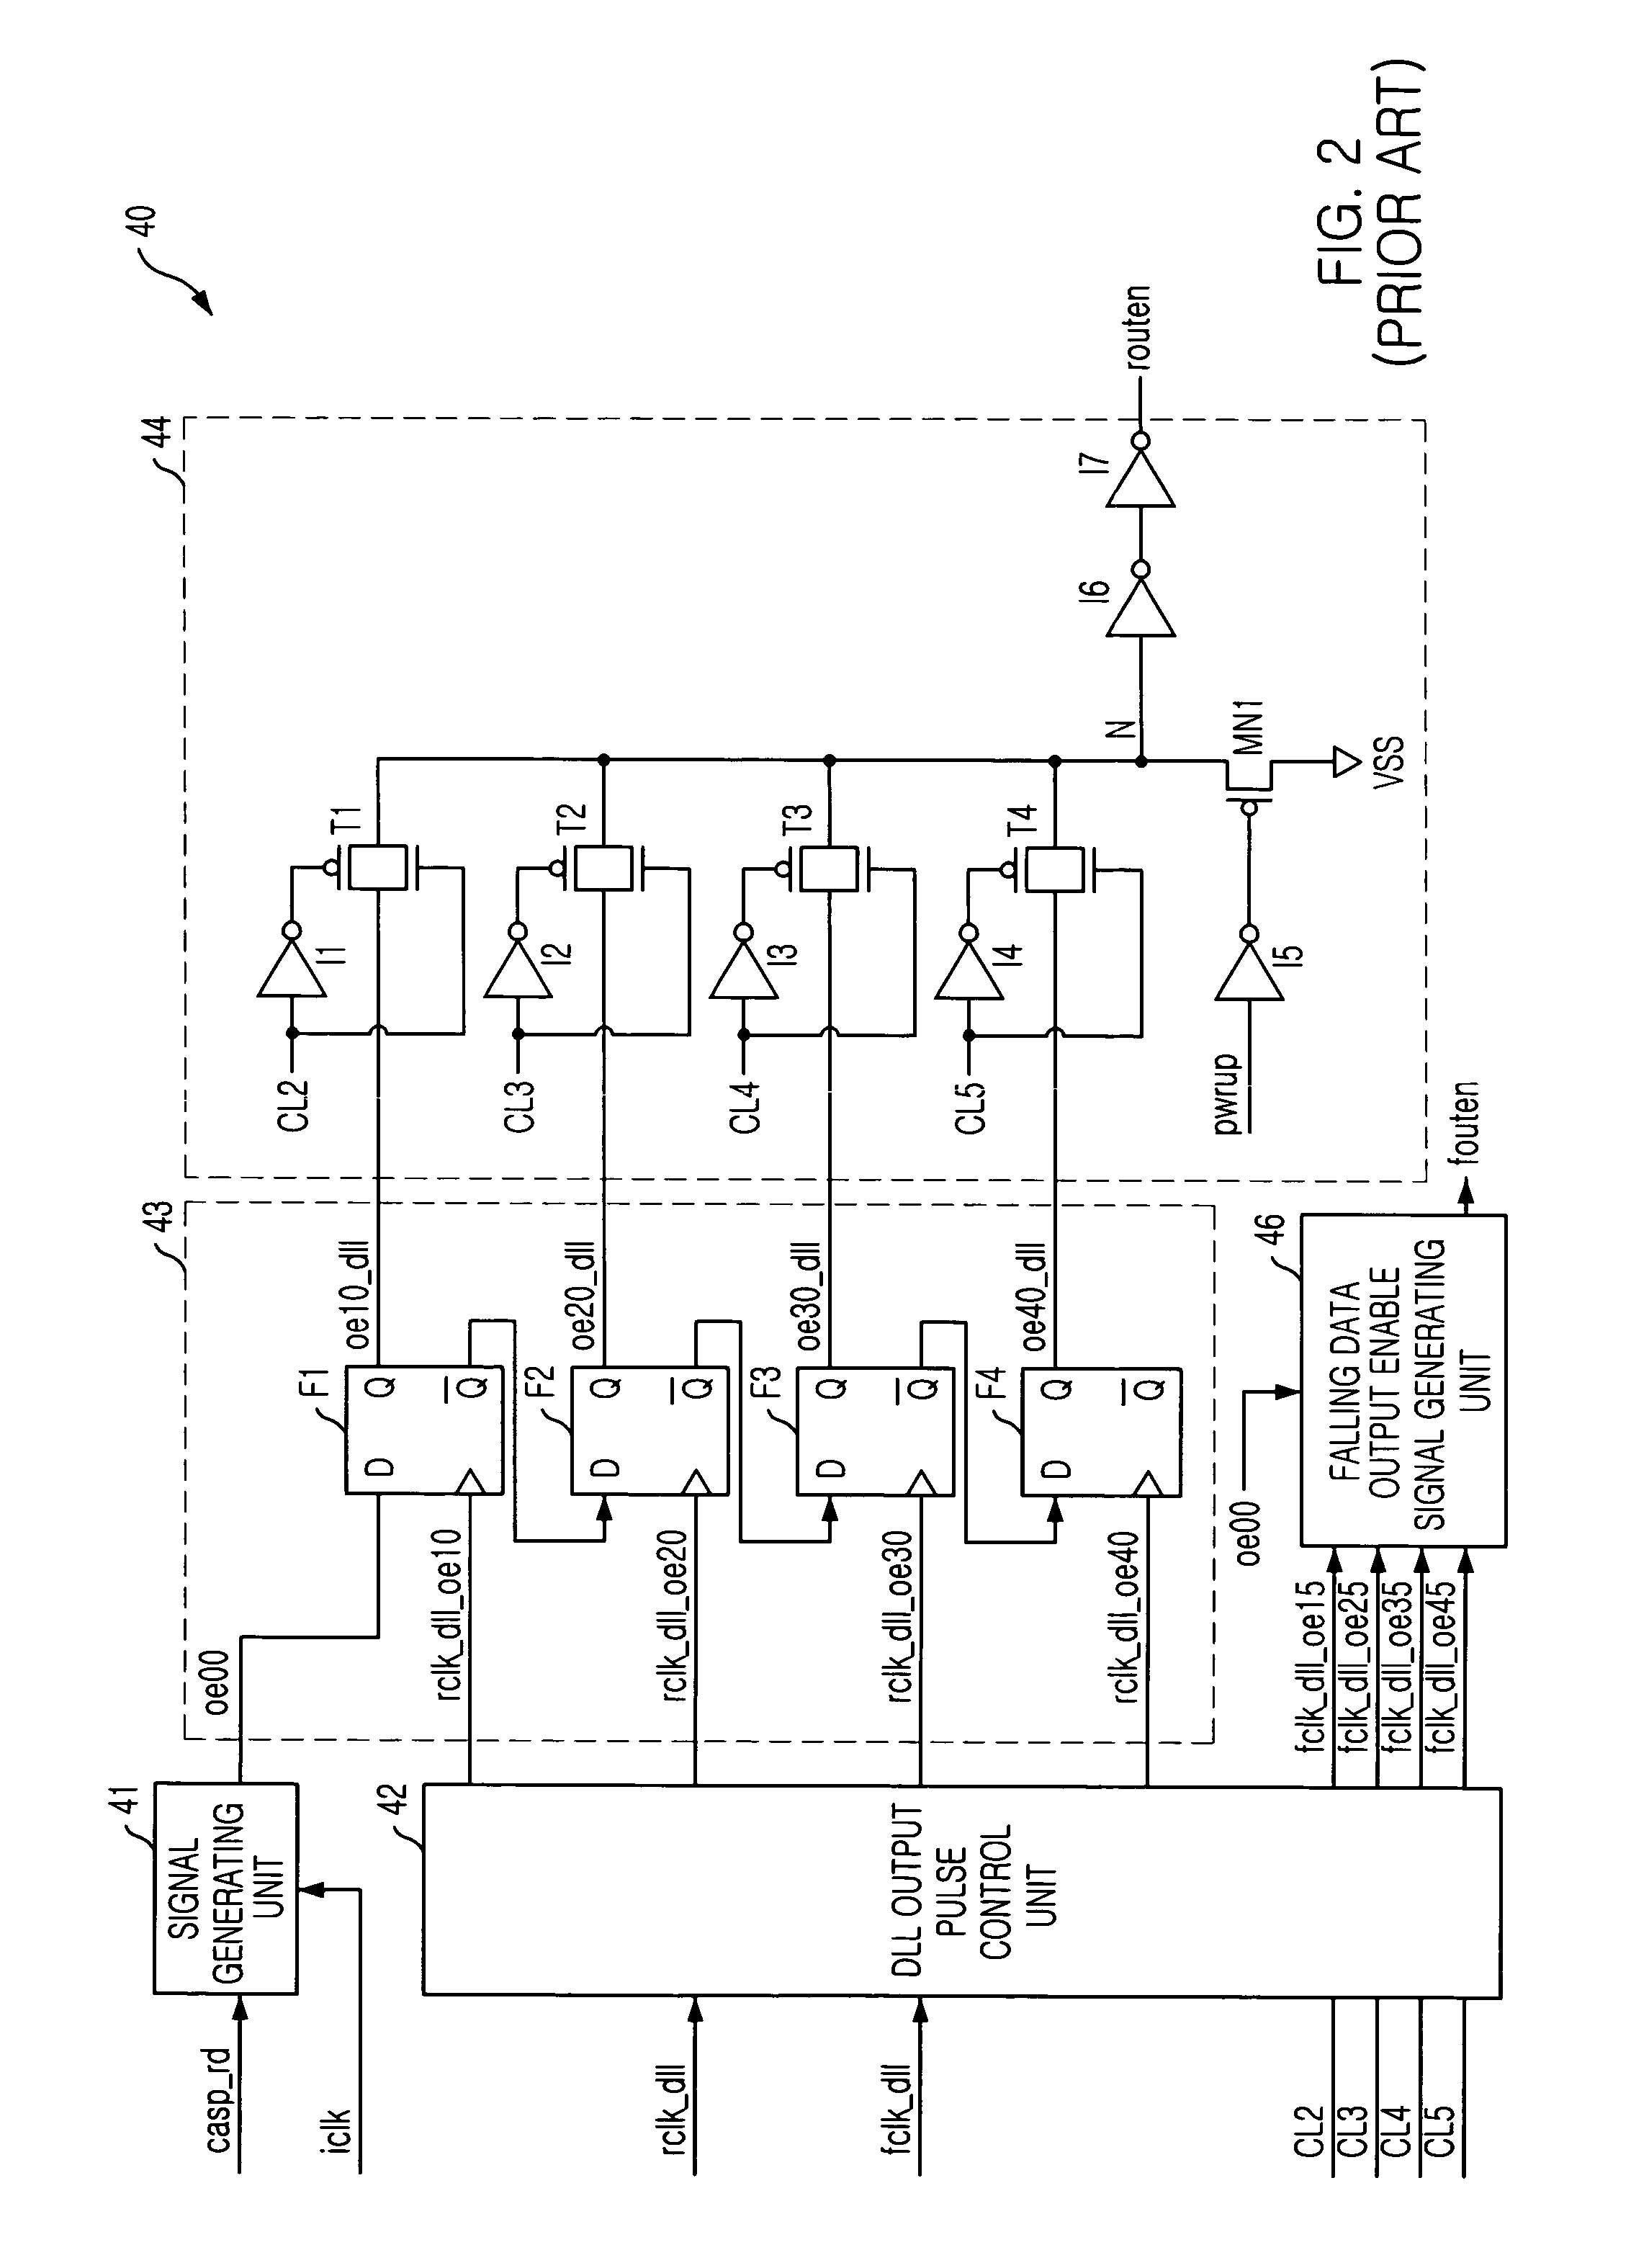 Data output control circuit